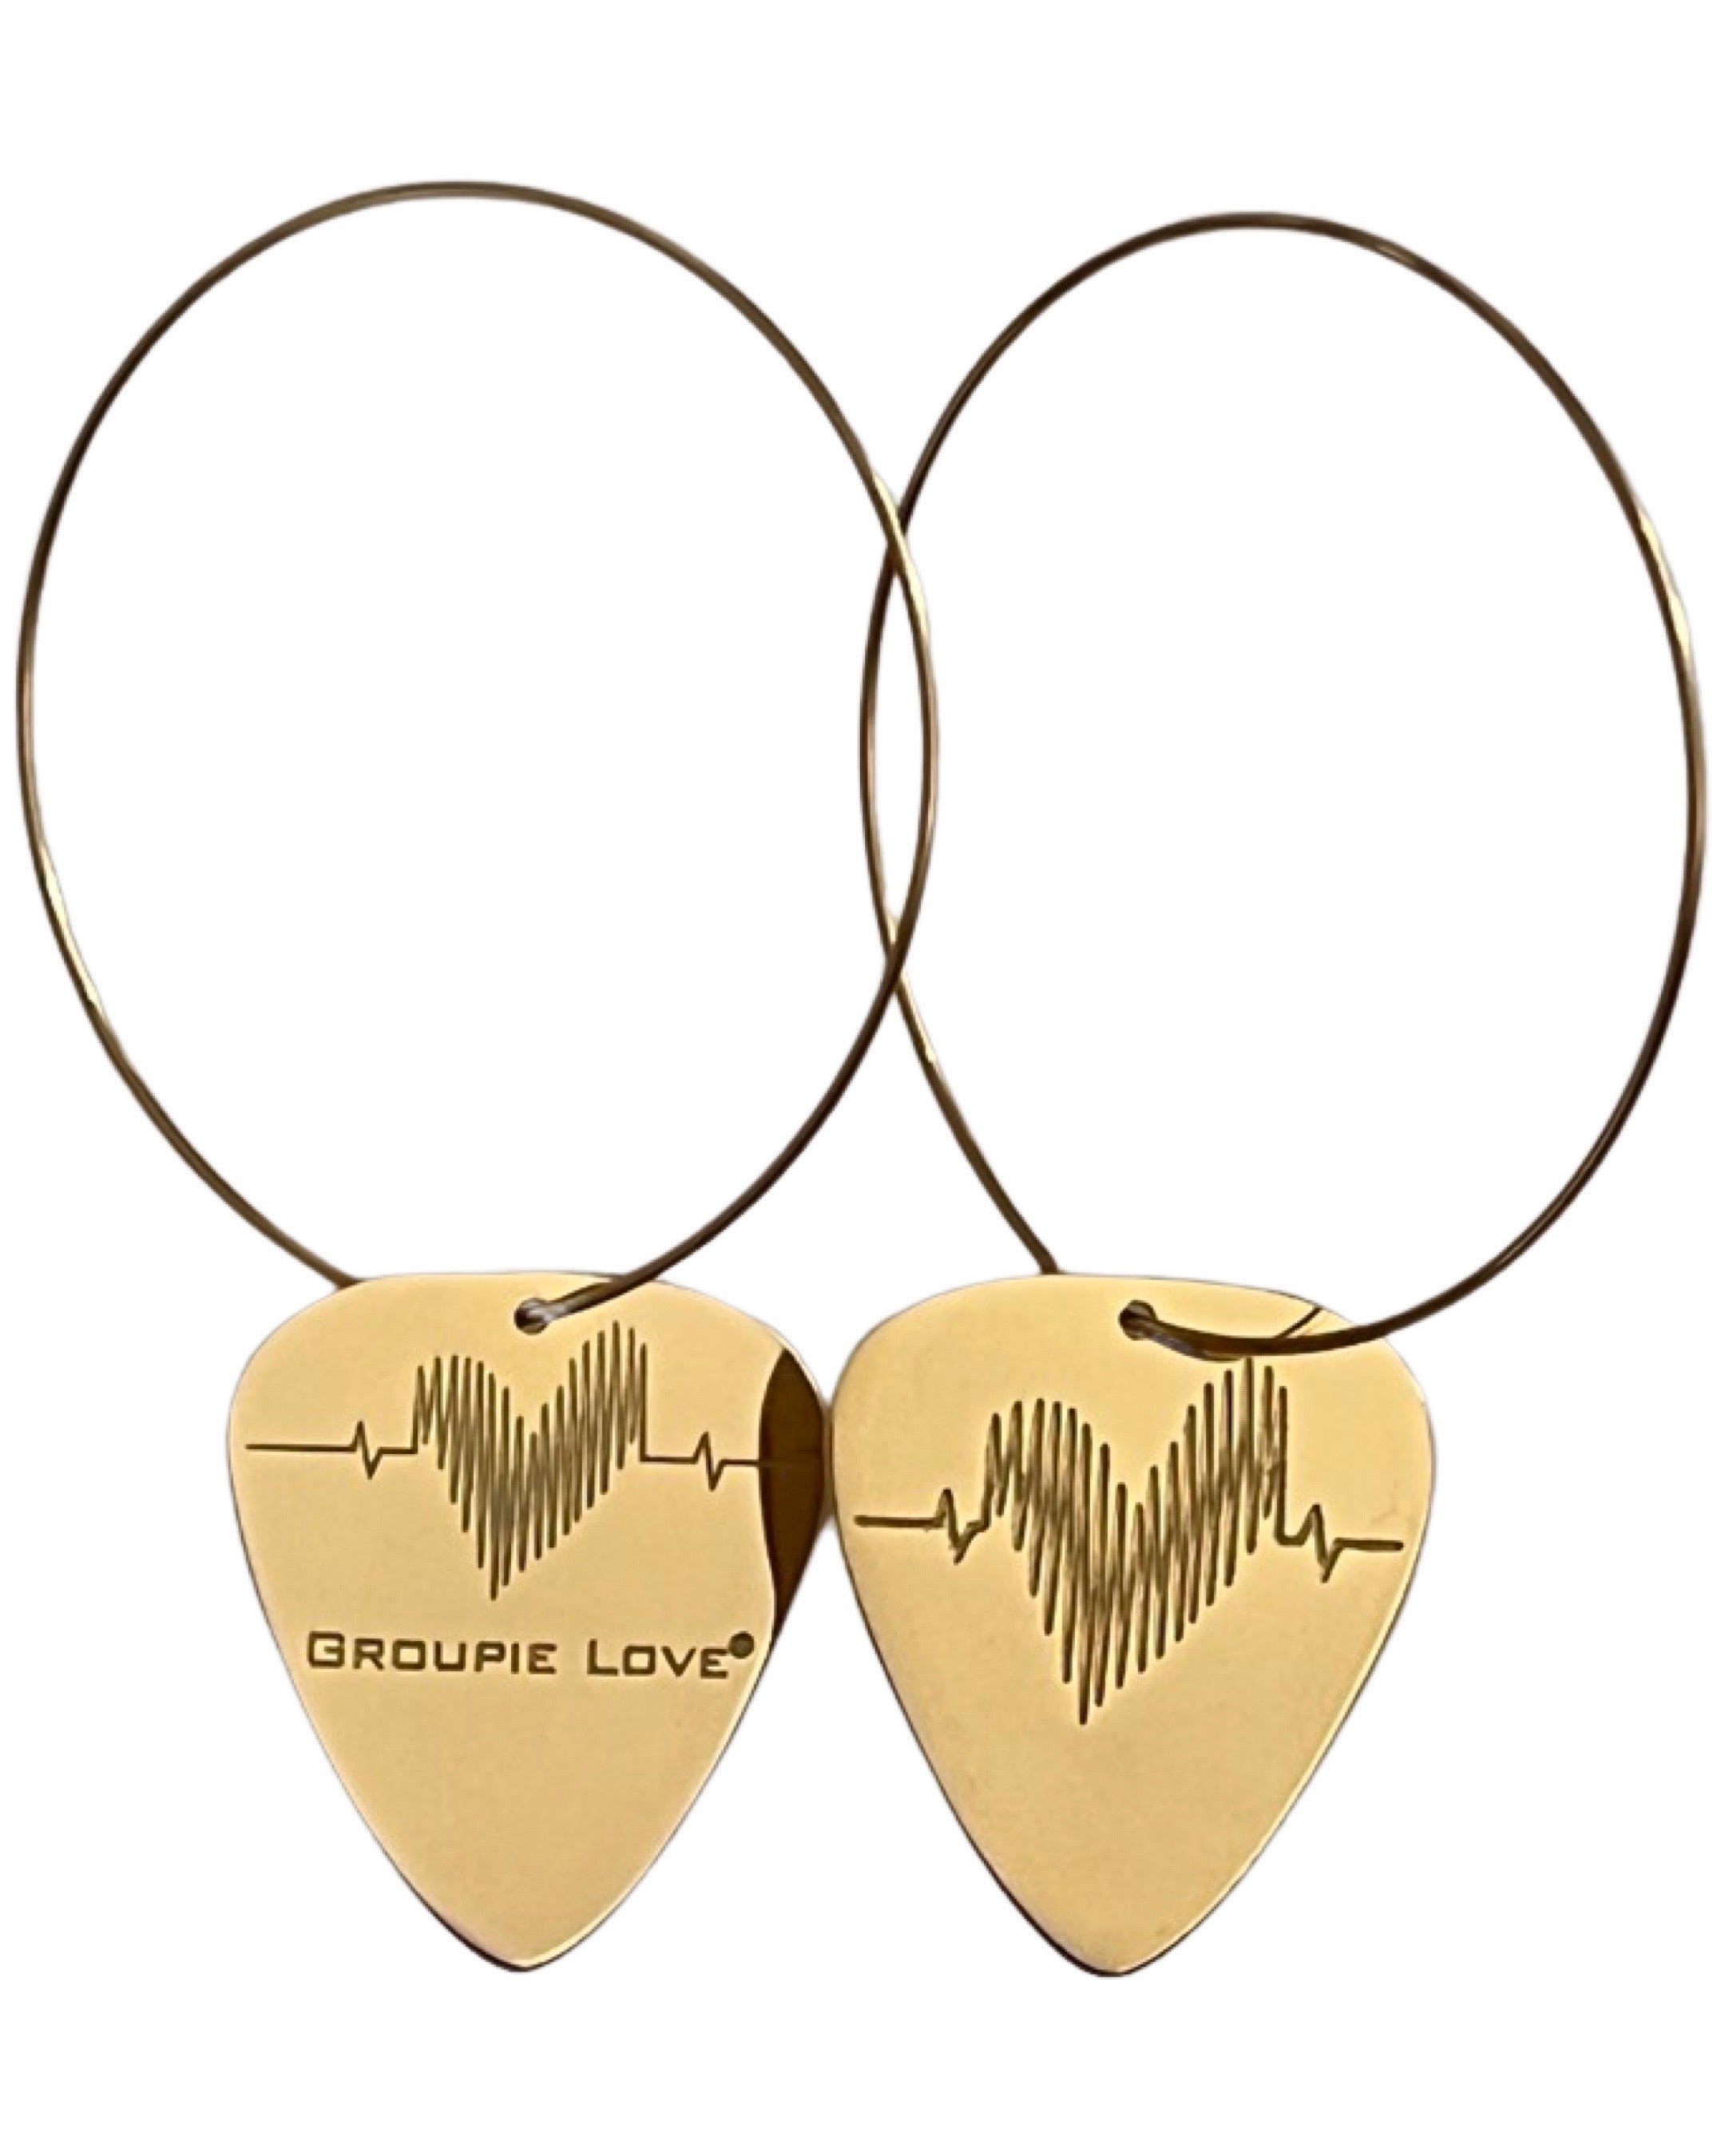 WS Groupie Love Gold Single Guitar Pick Earrings